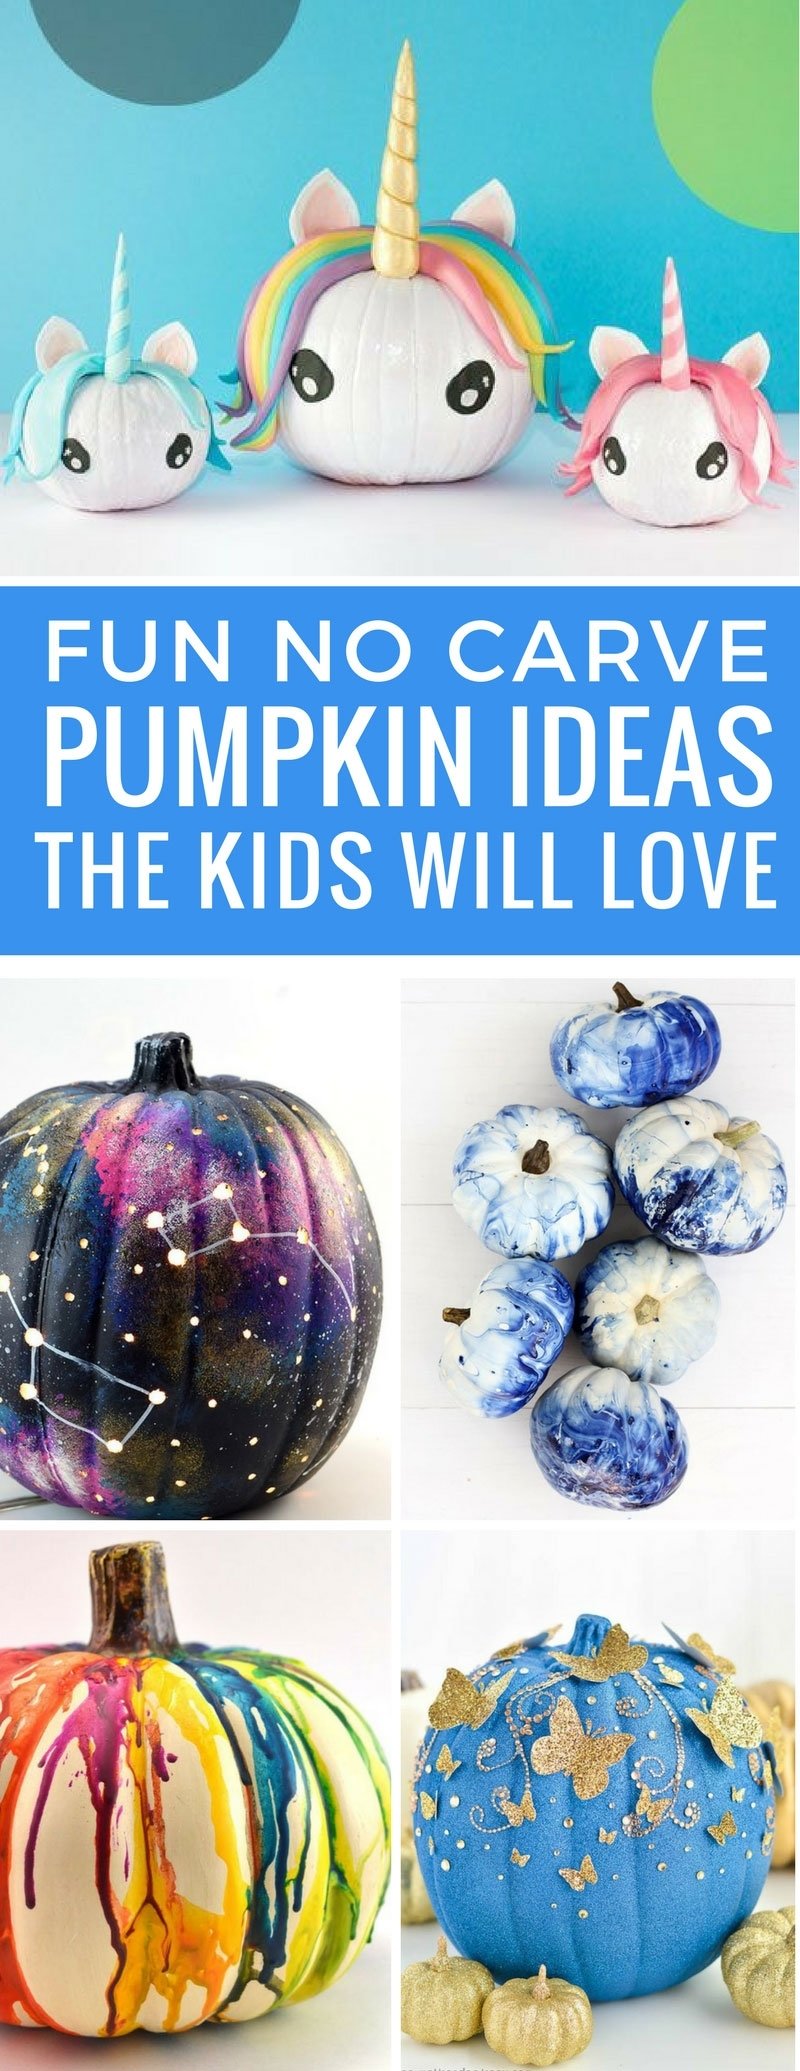 10 Wonderful No Carving Pumpkin Decorating Ideas 25 unusual pumpkin decorating ideas without carving 2022